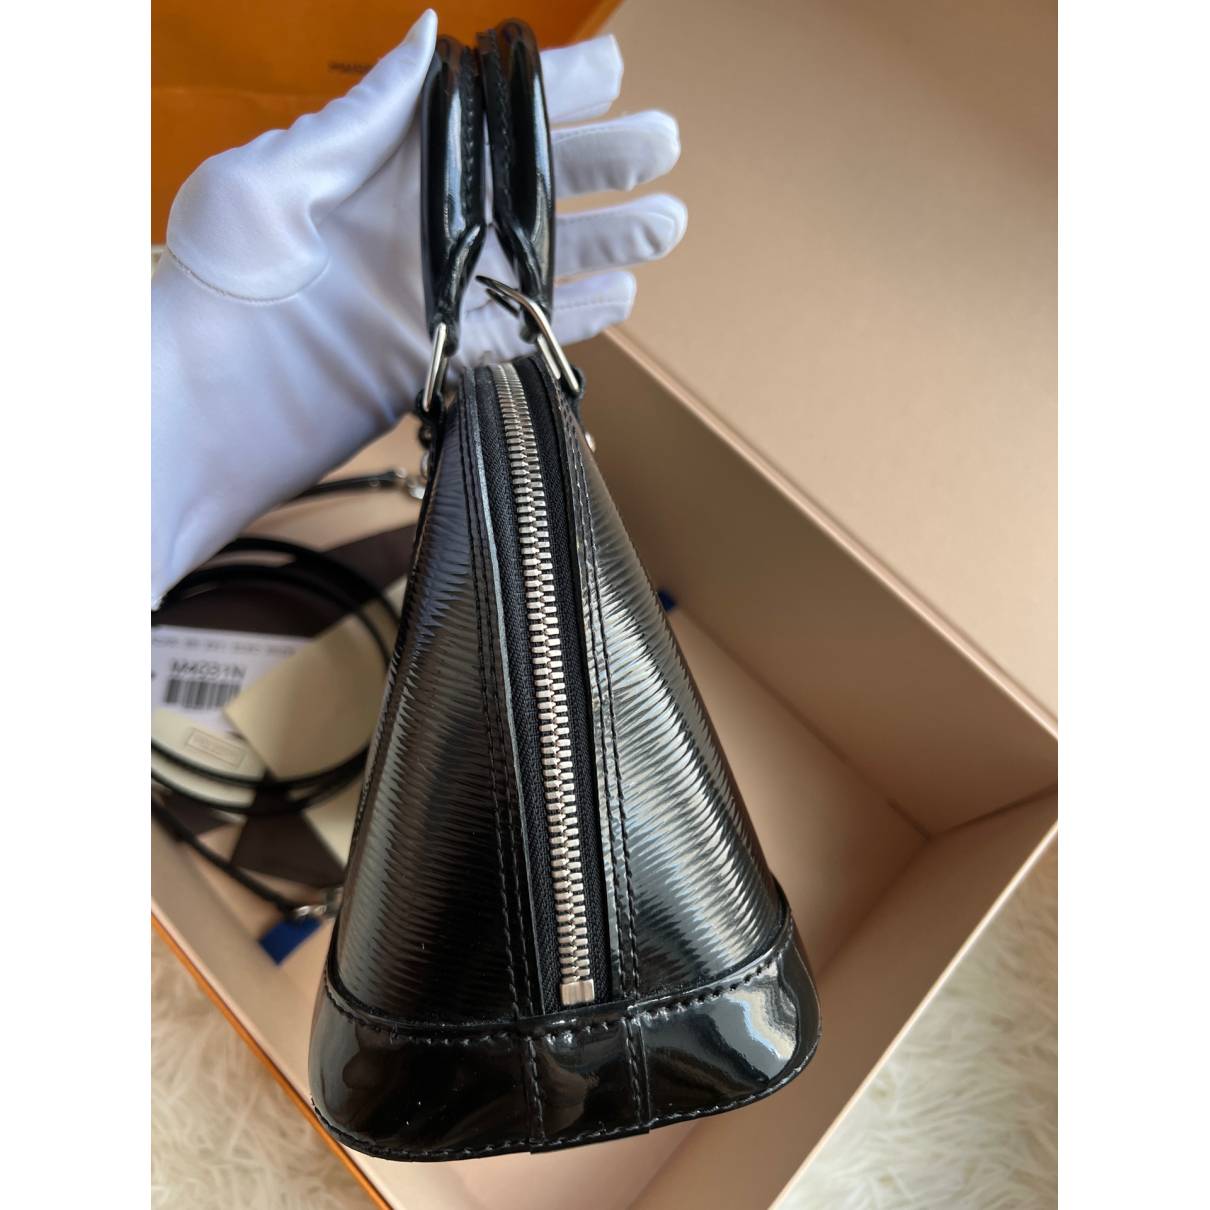 Louis Vuitton Alma Small Model Handbag in Black Patent Epi Leather